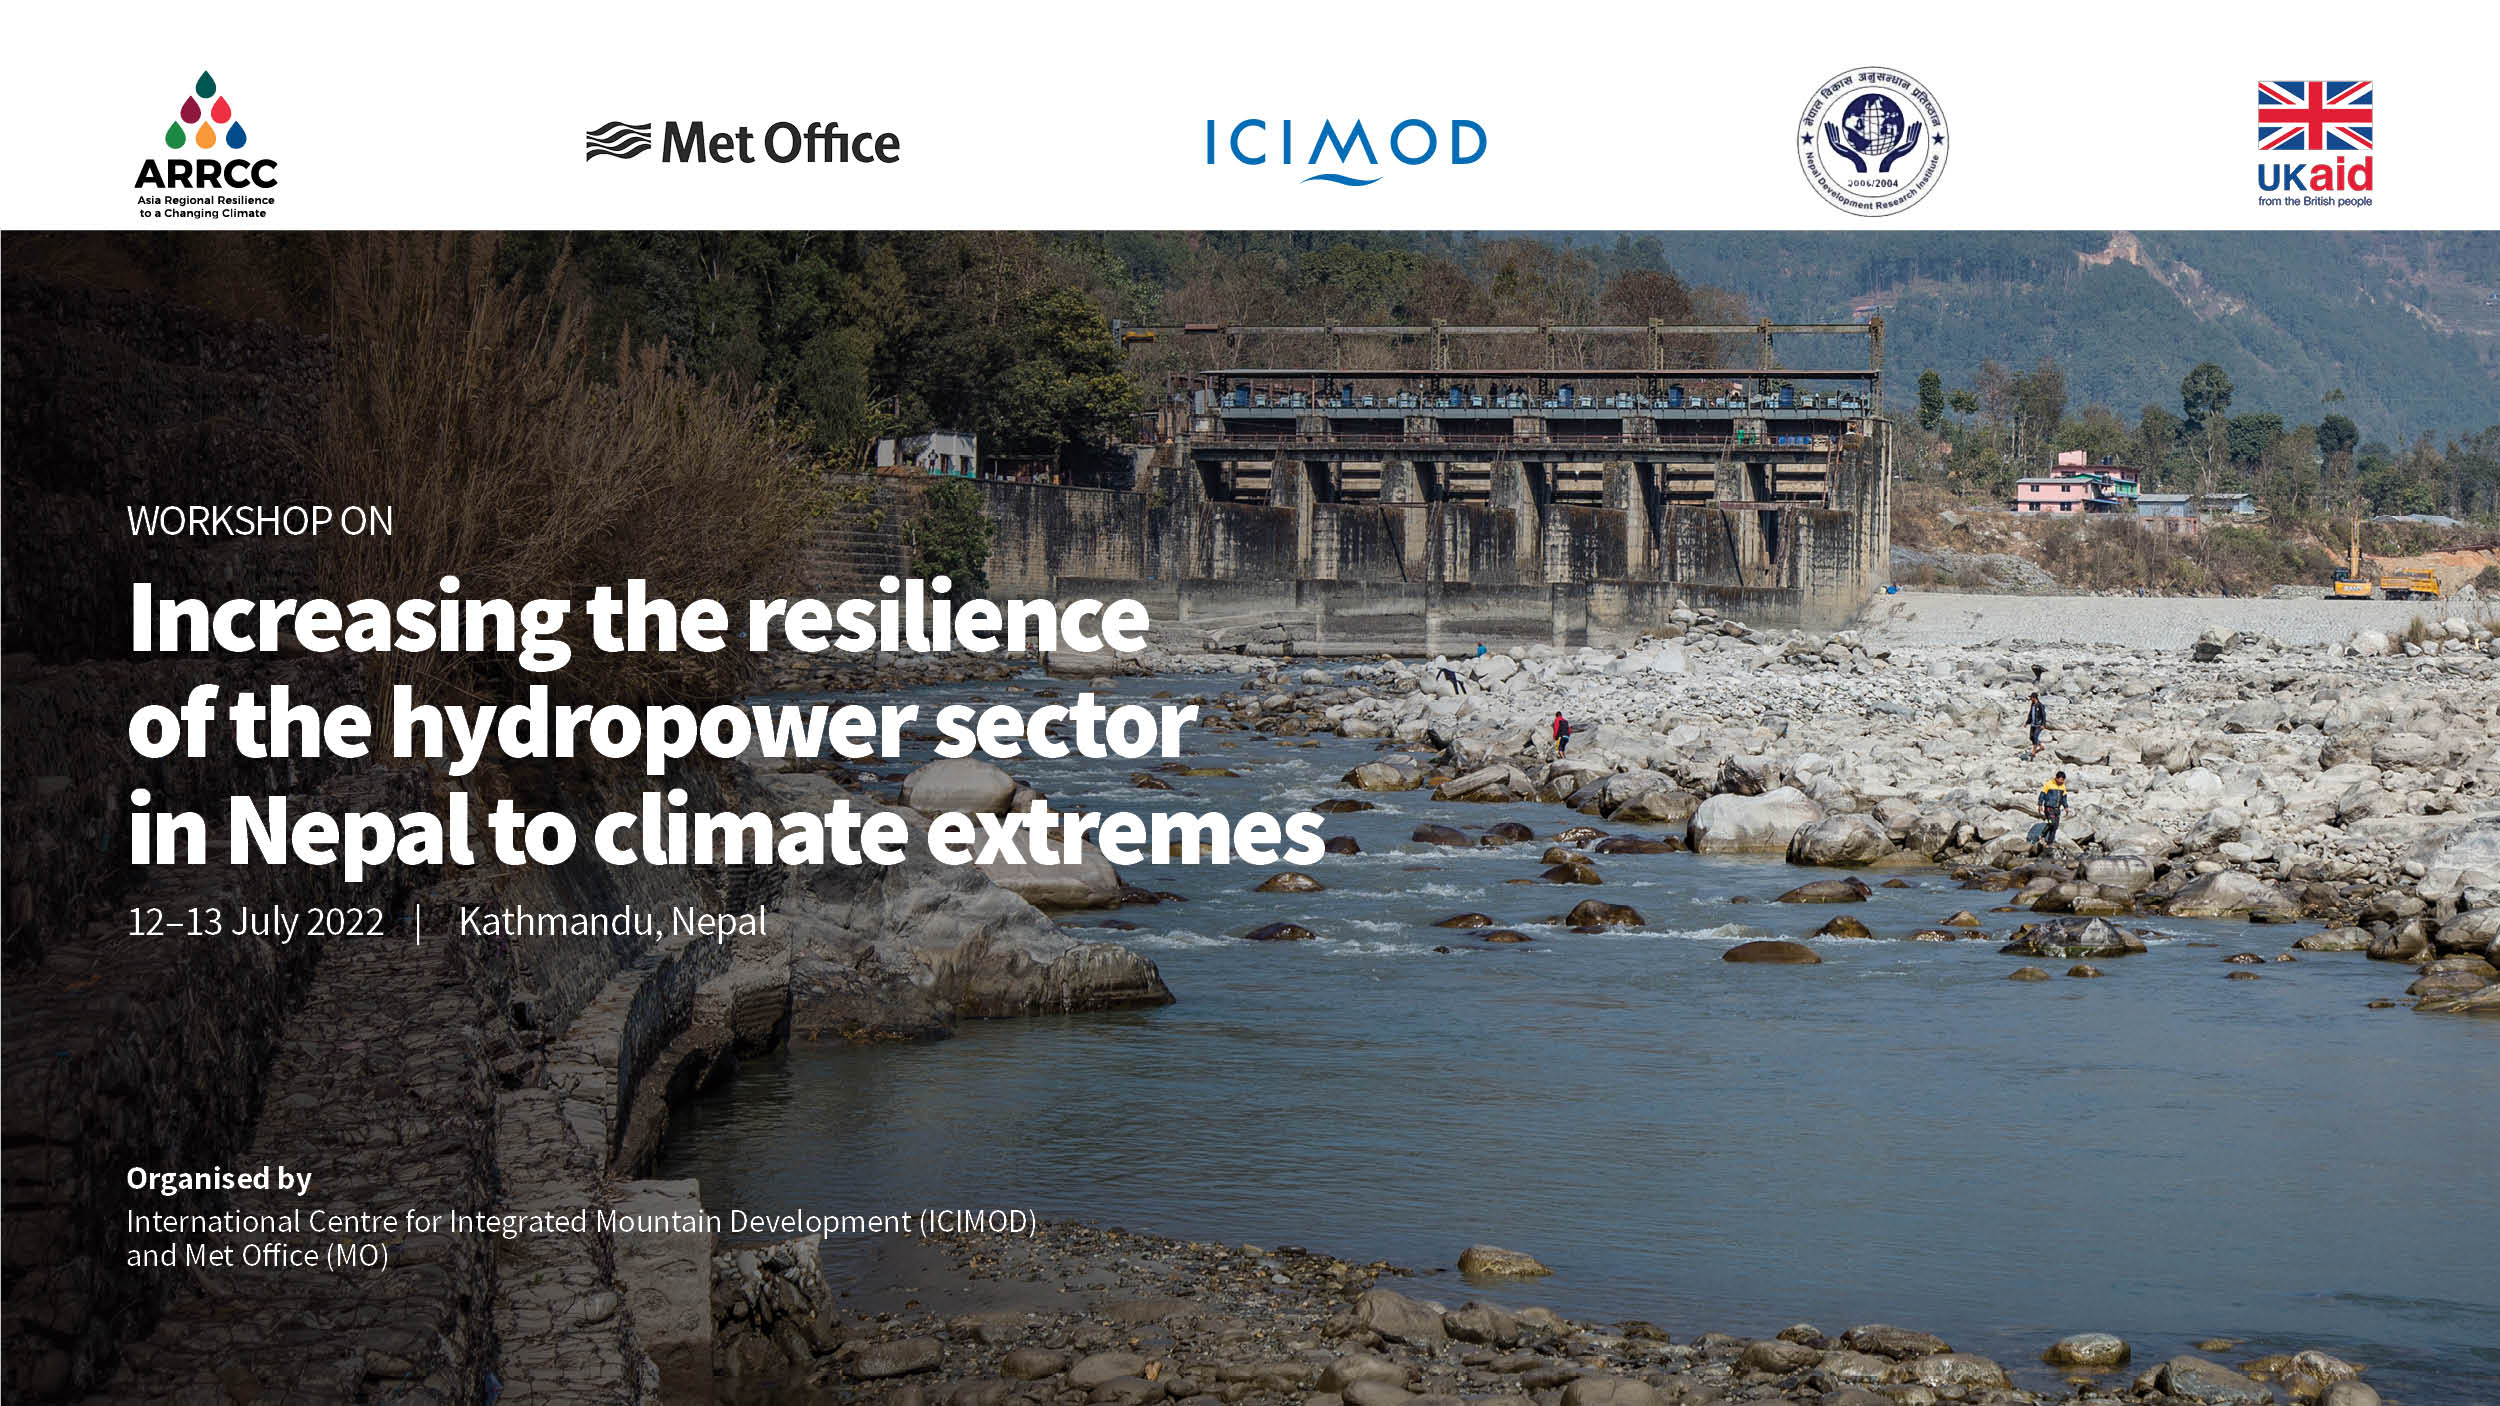 hydropower sector in Nepal